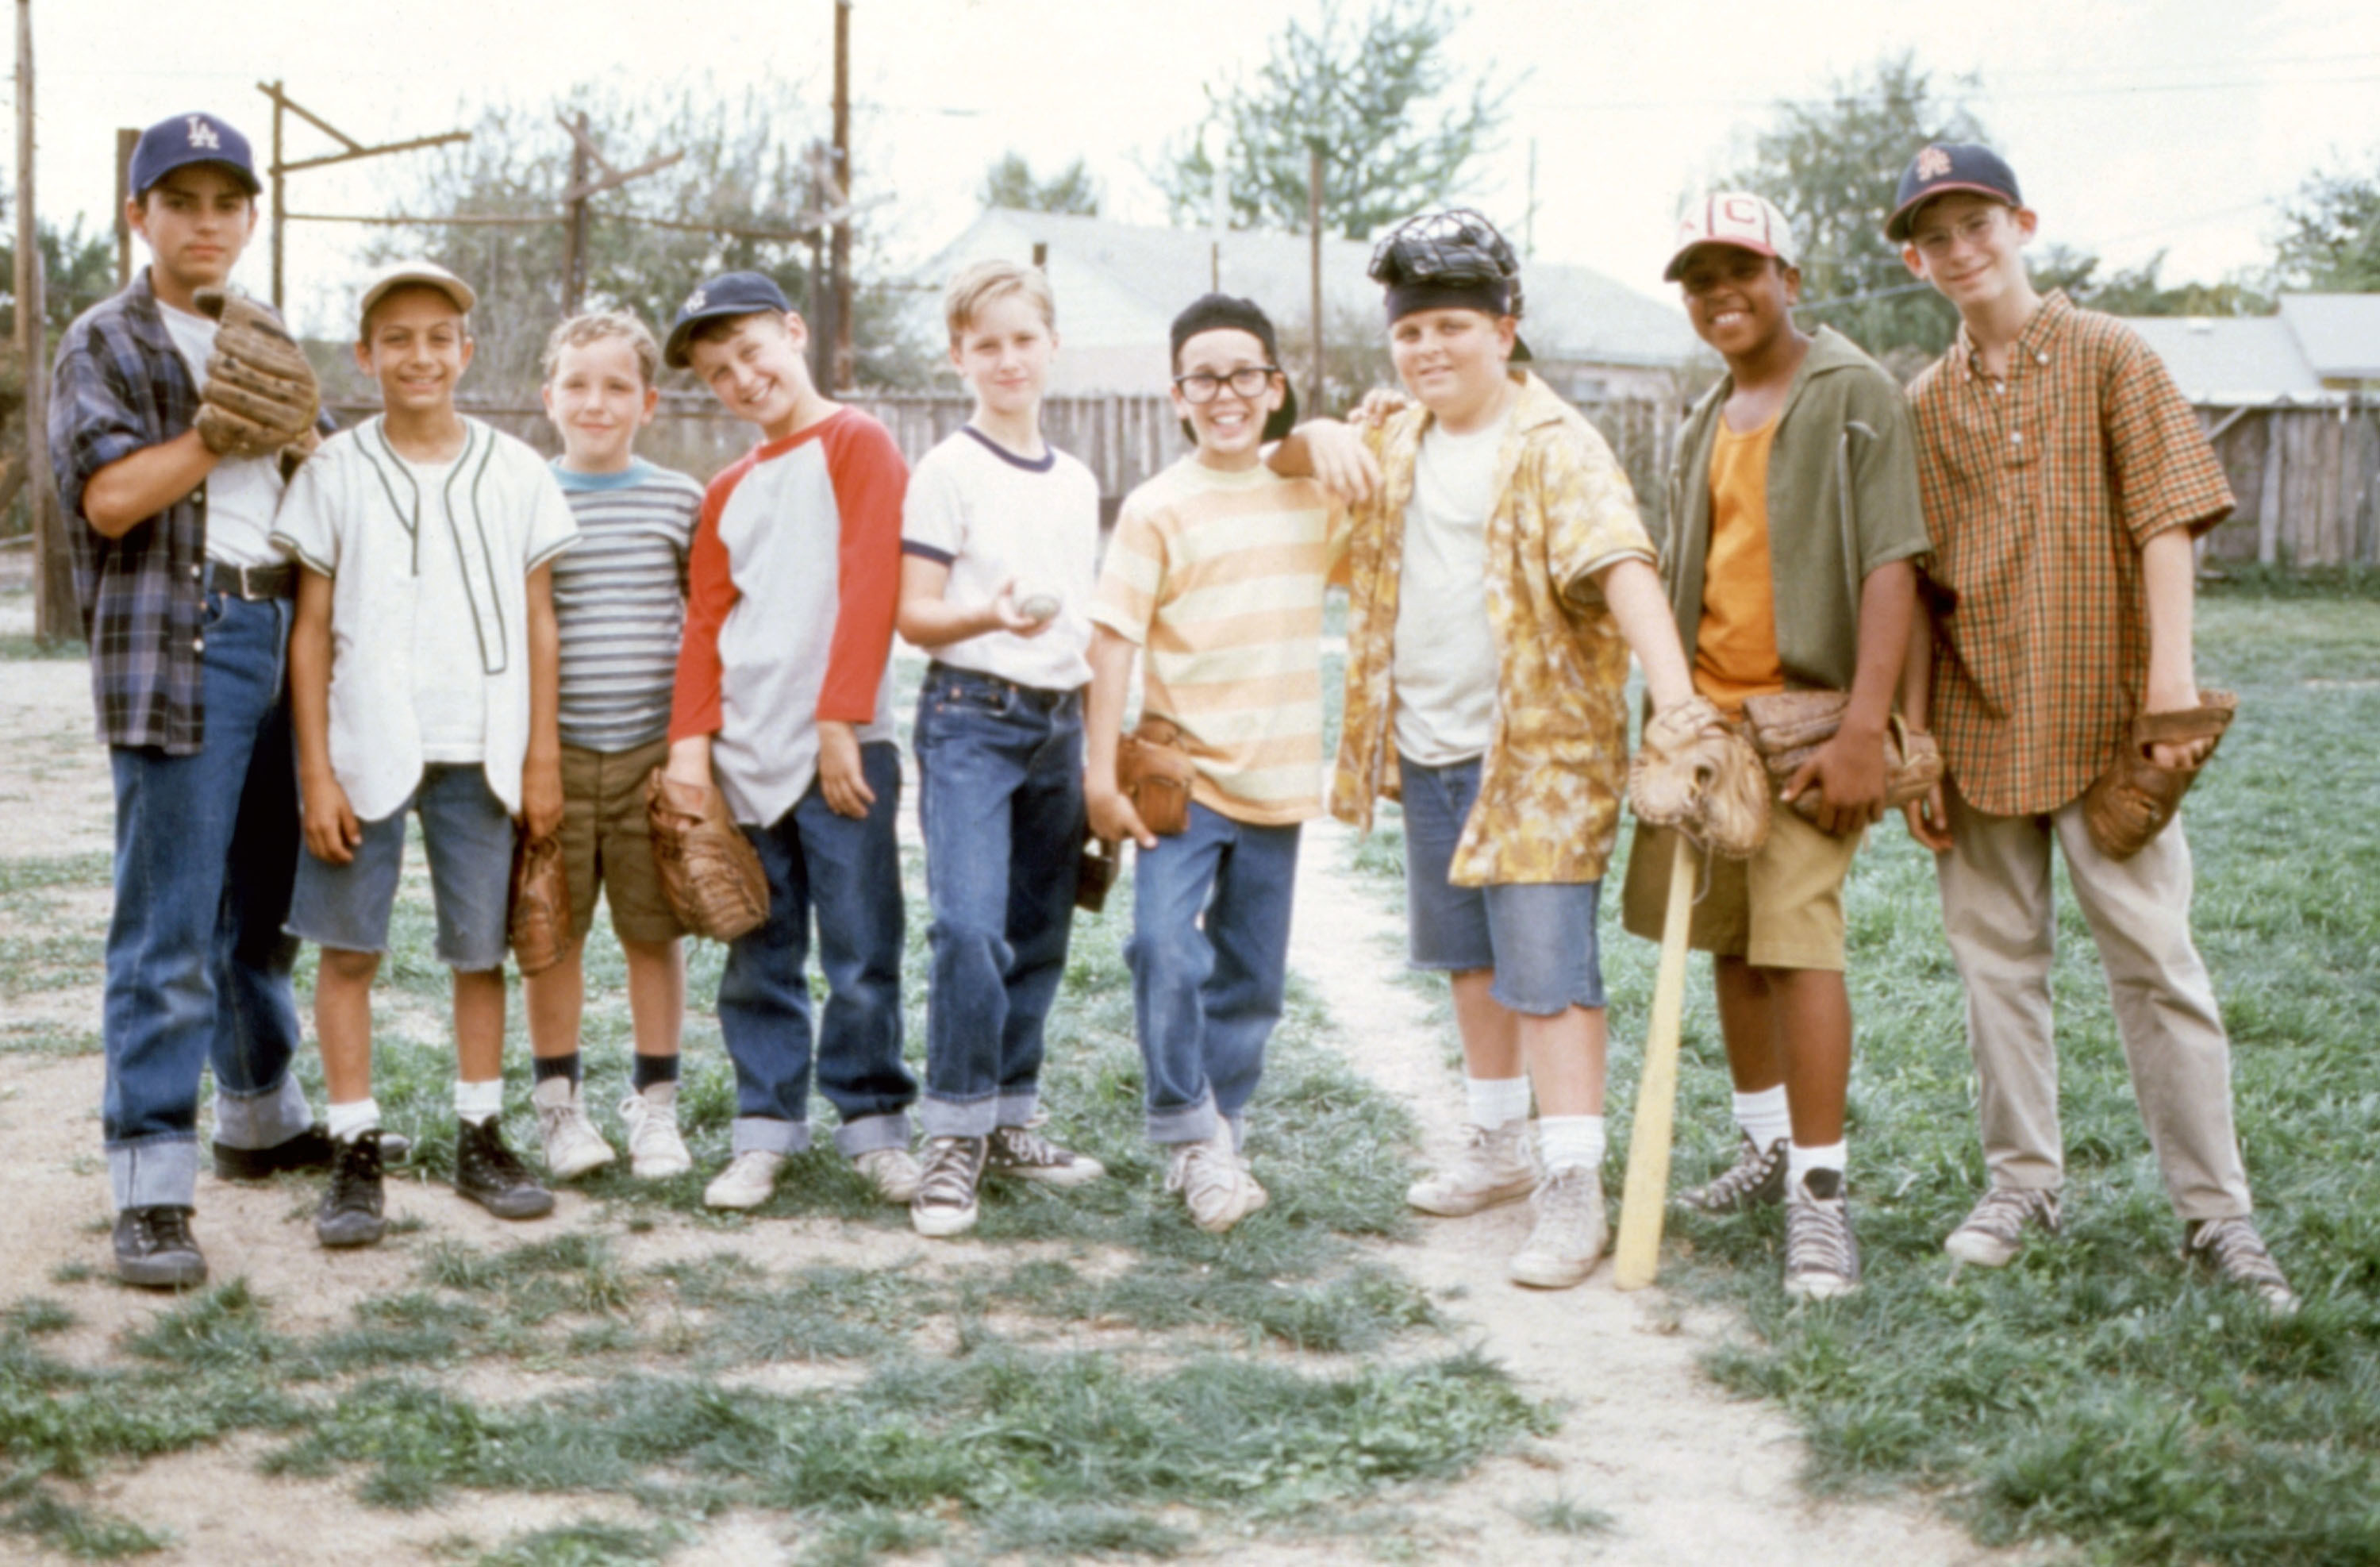 The team stands on a baseball diamond